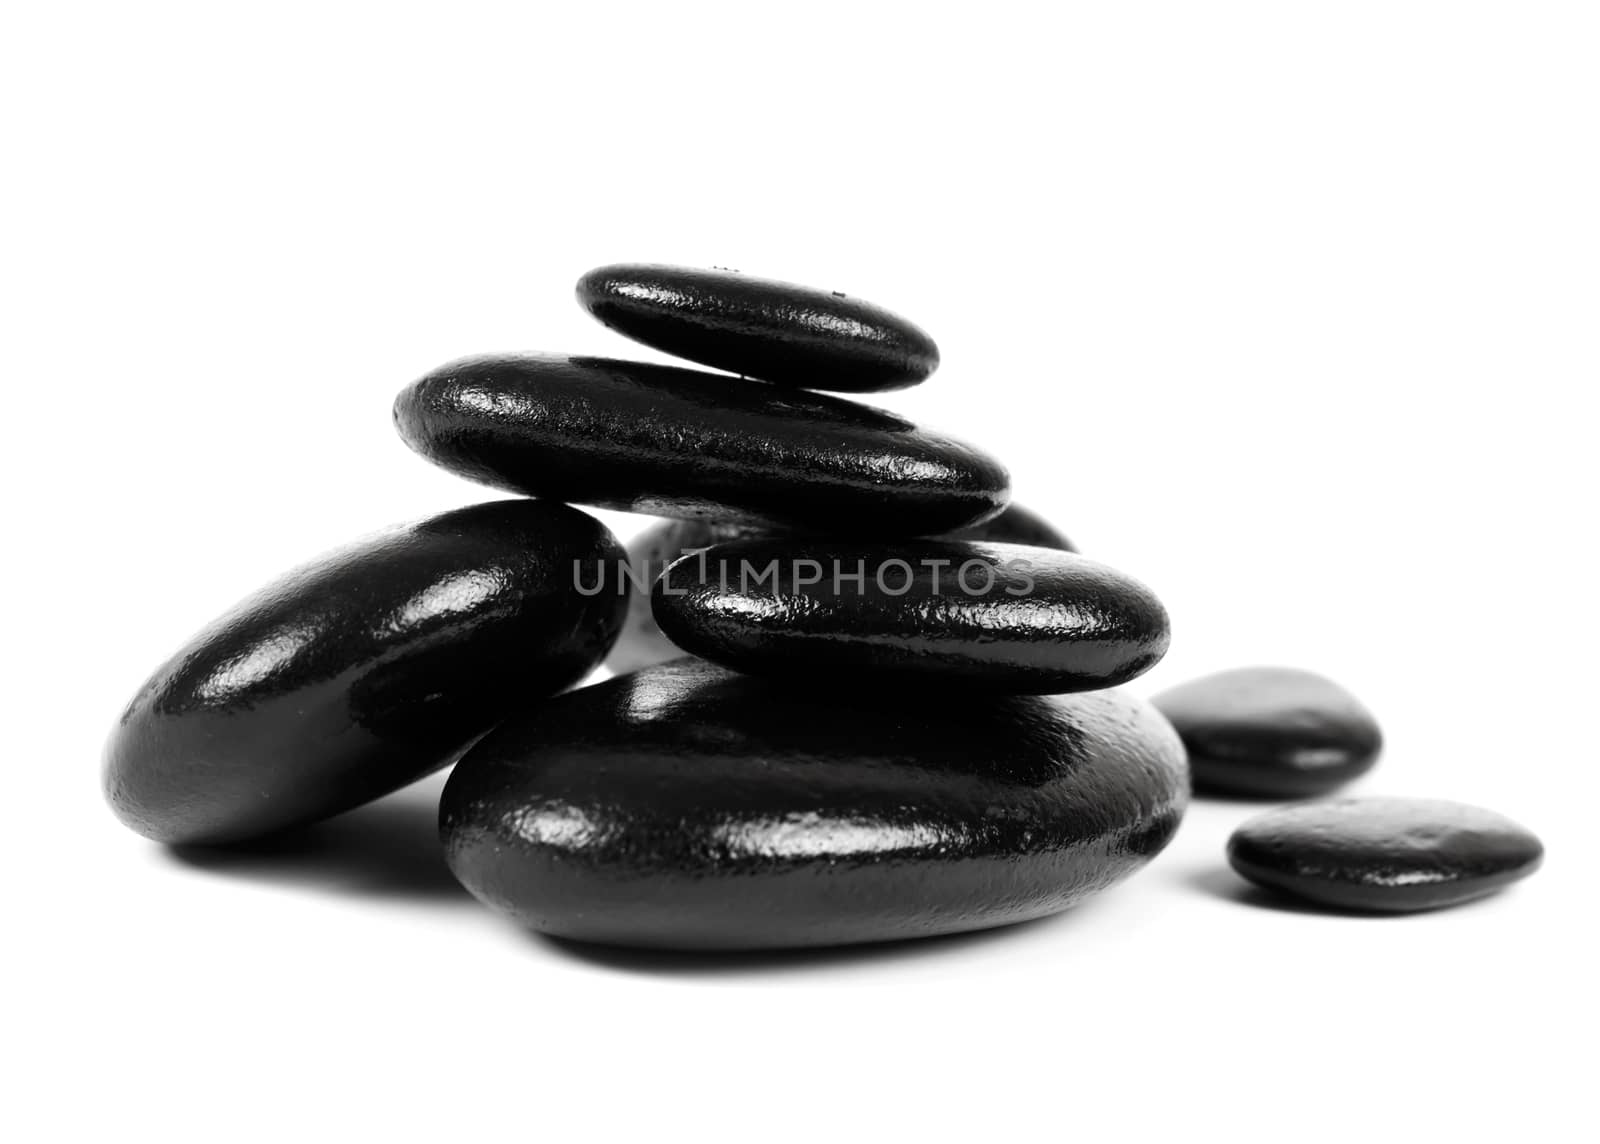 Black stones over white background